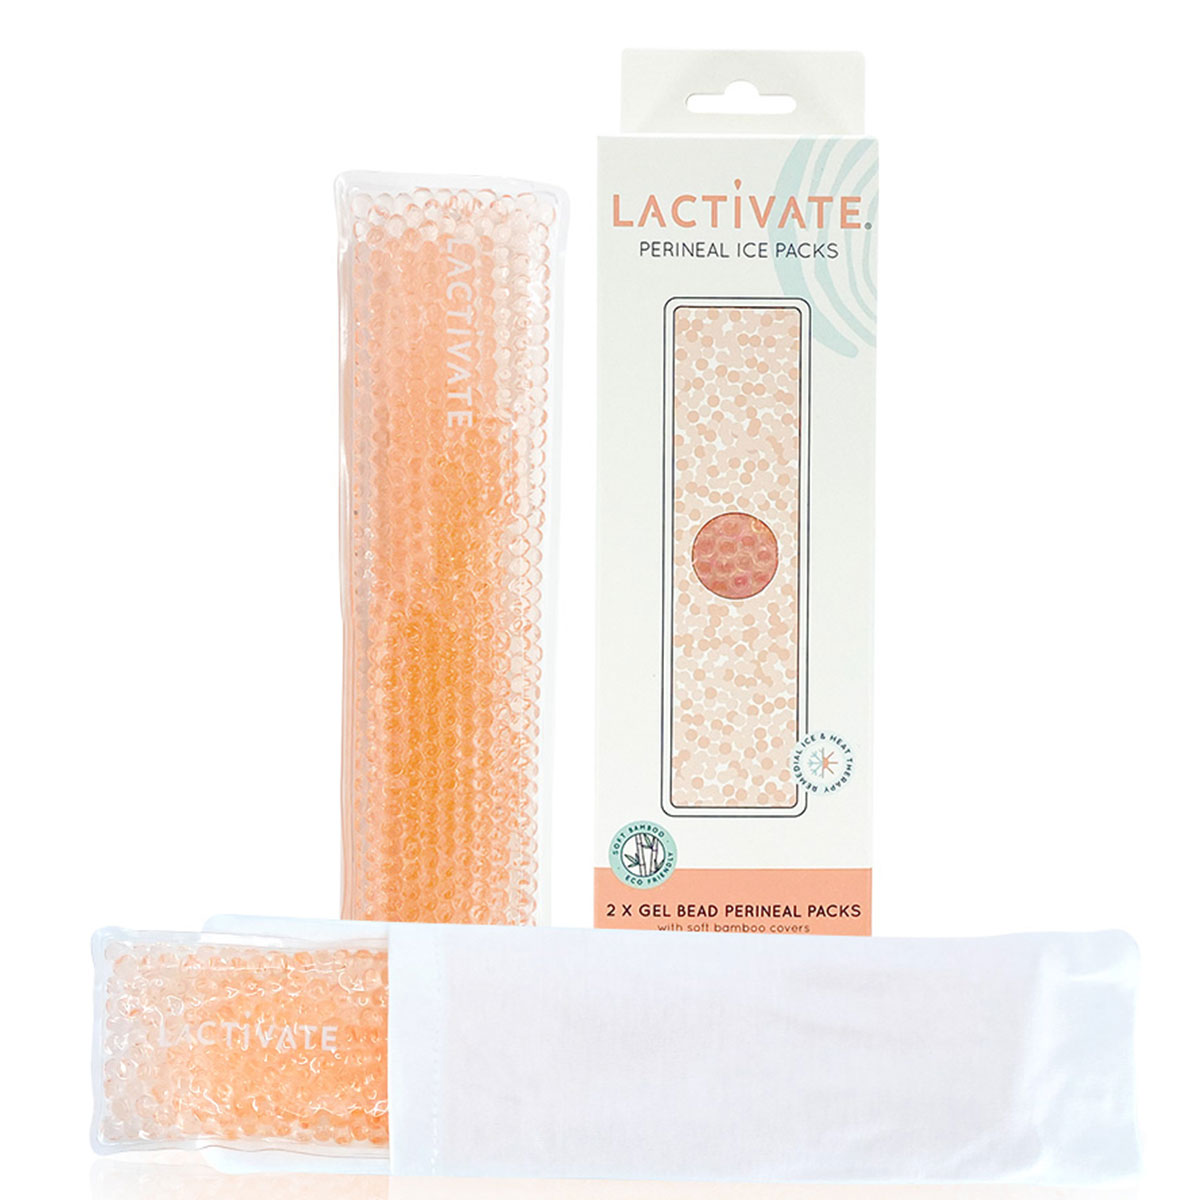 Lactivate Perineal Gel Ice Packs 2 Pack